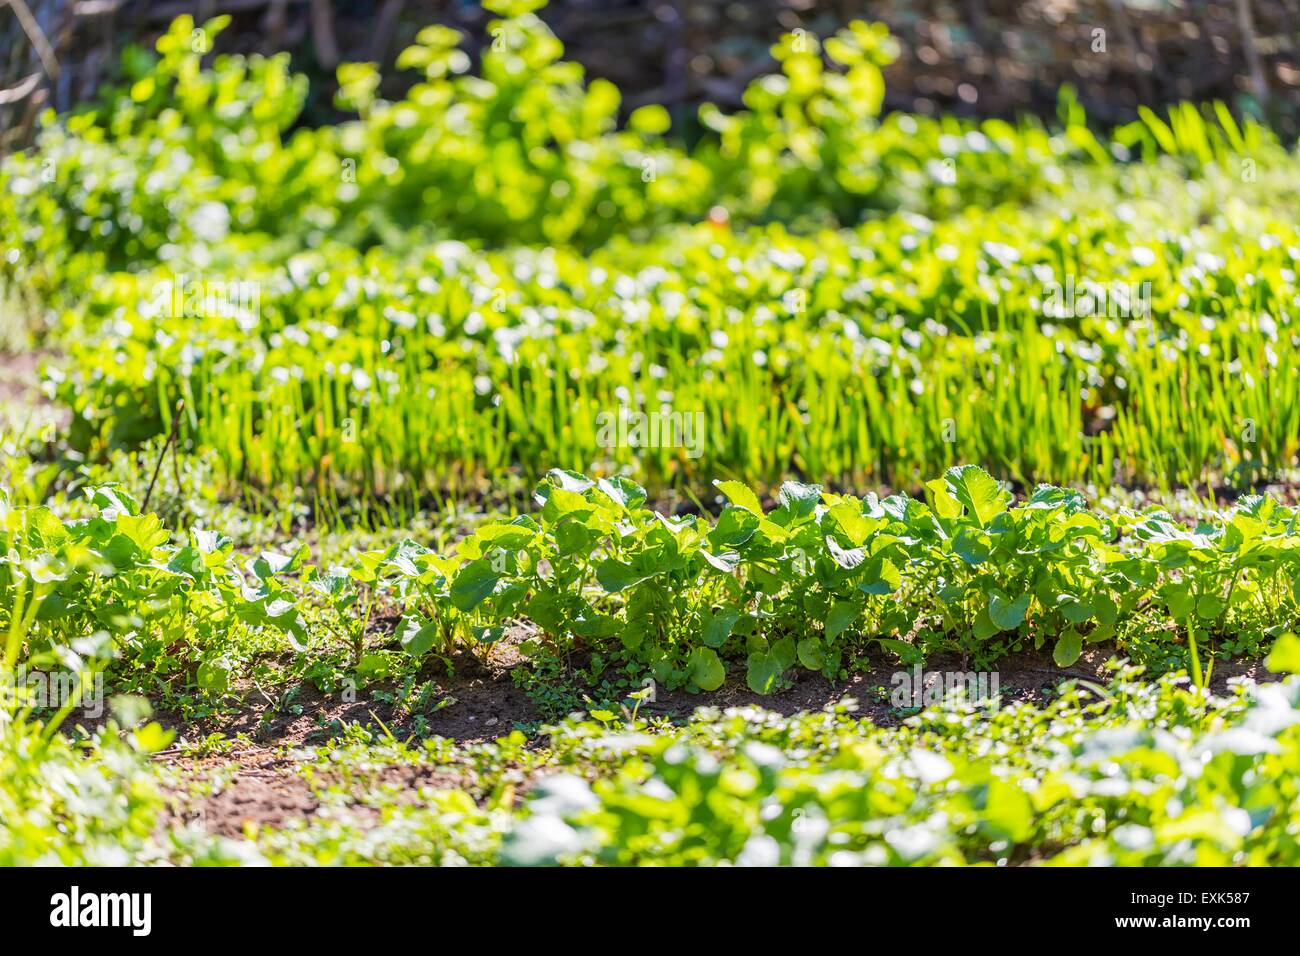 Beautiful ecologic organic garden with small vegetables sprouts. Springtime garden Stock Photo